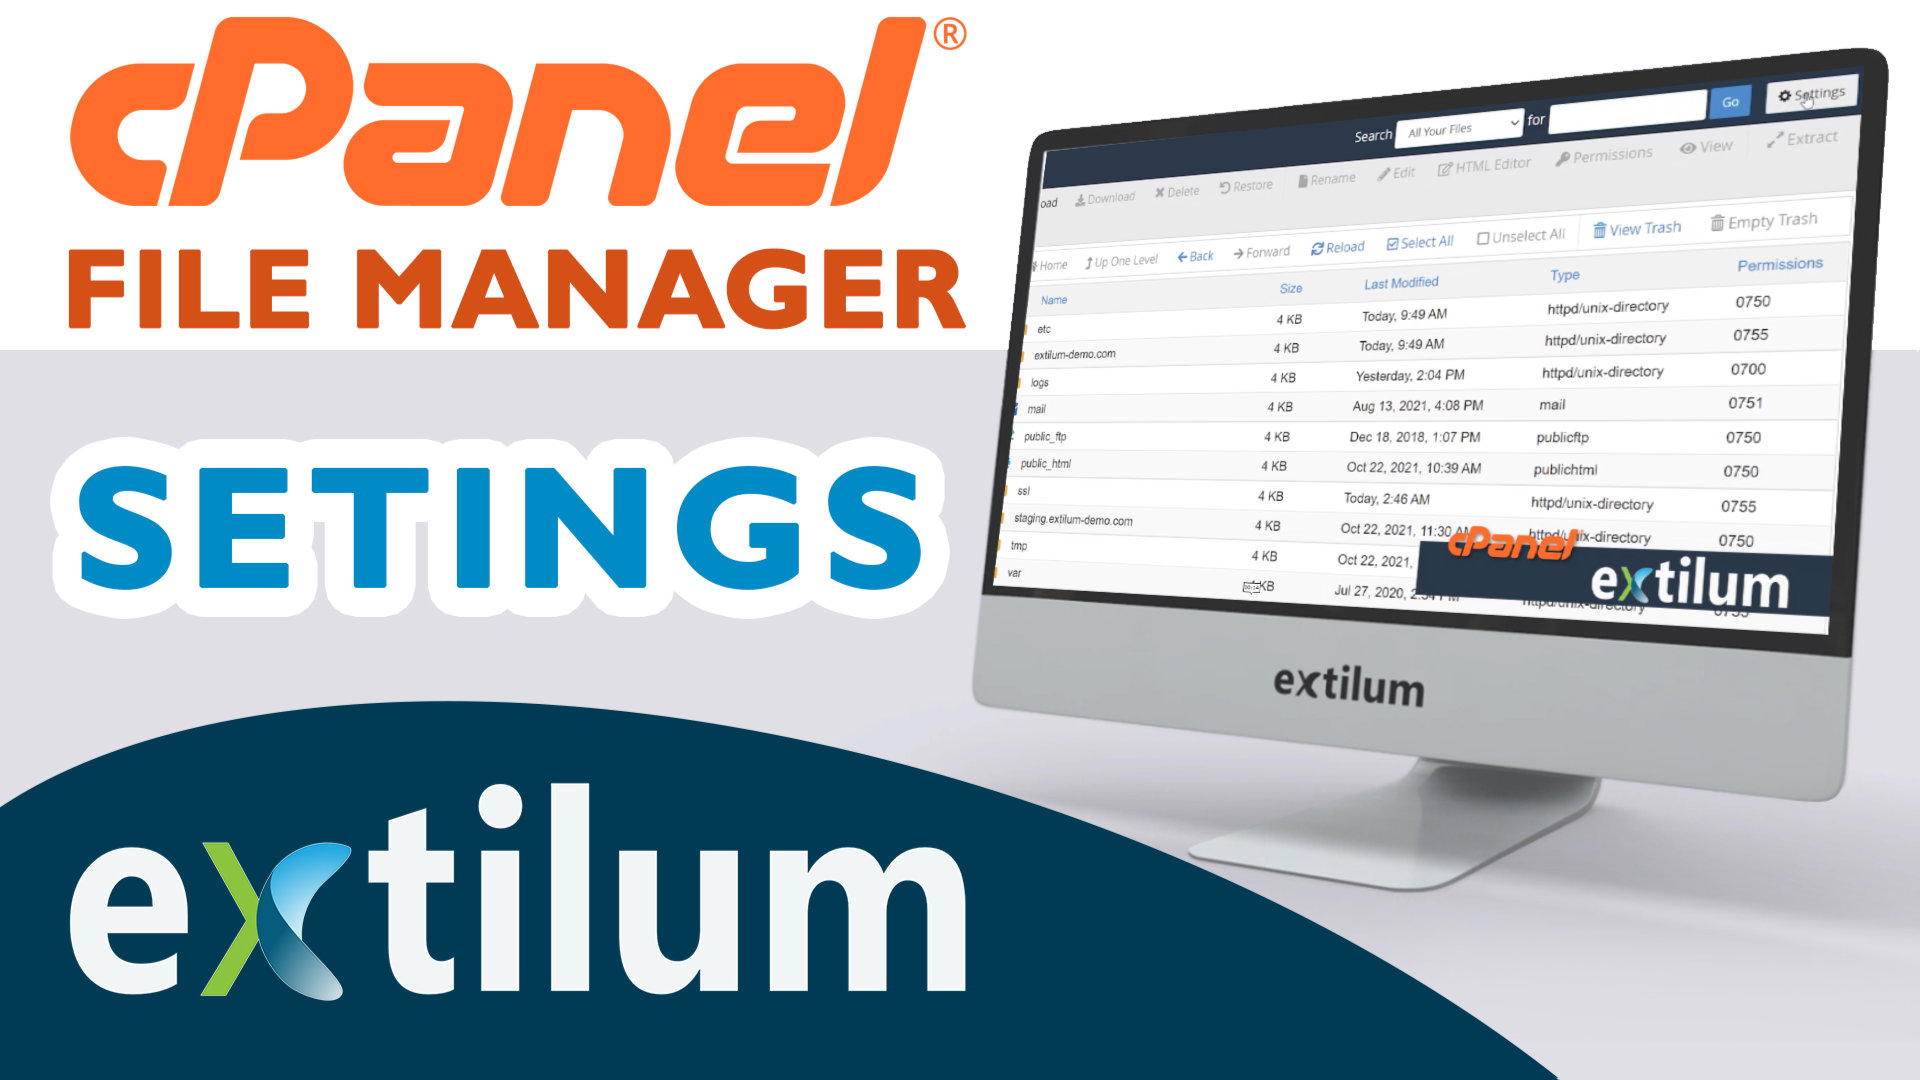 Extilum cpanel - file manager - settings